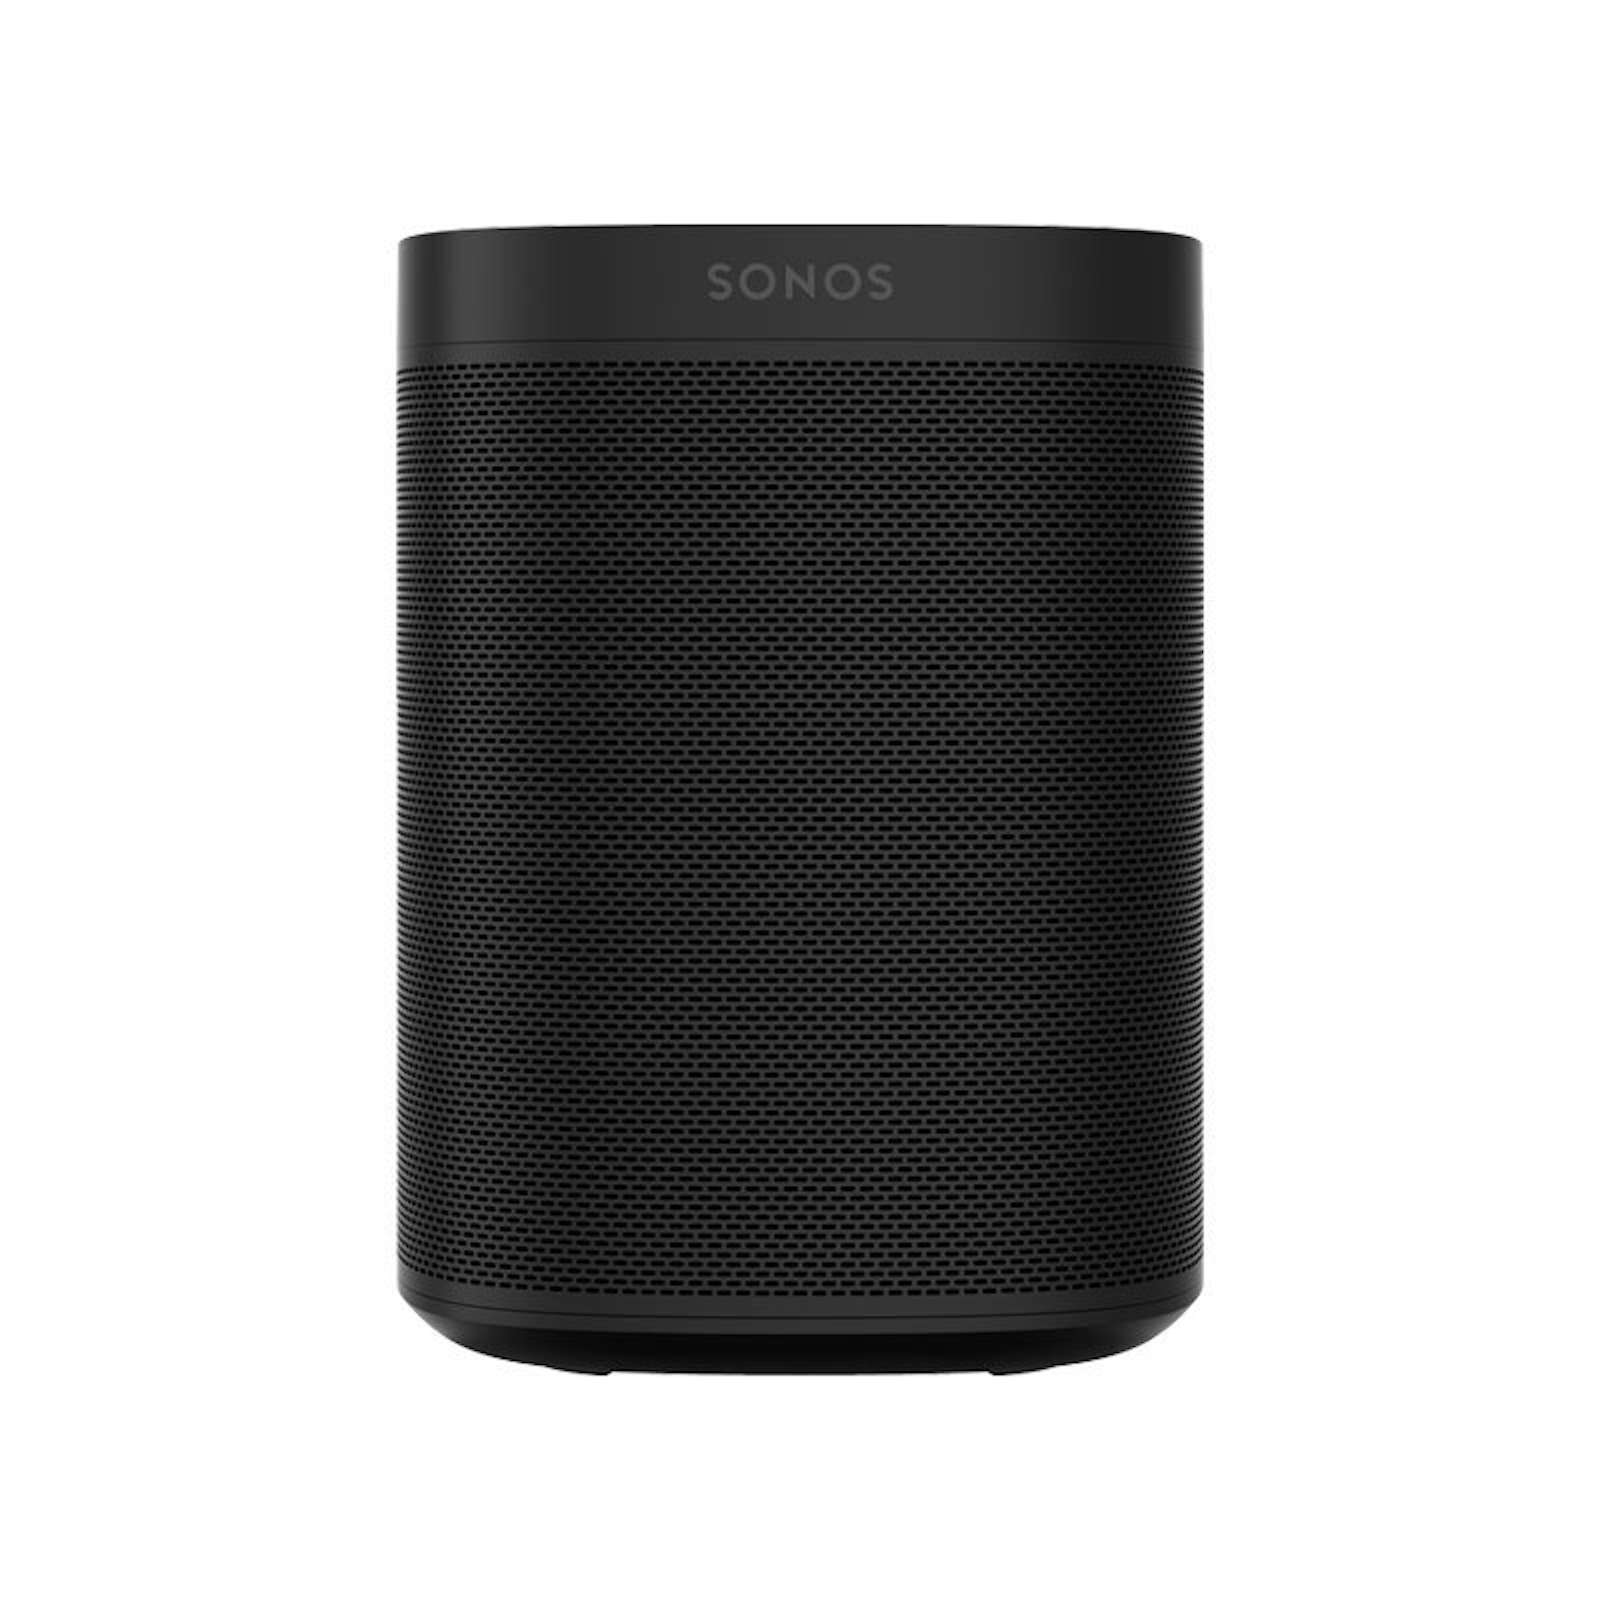 Sonos One By Sonos Dwell